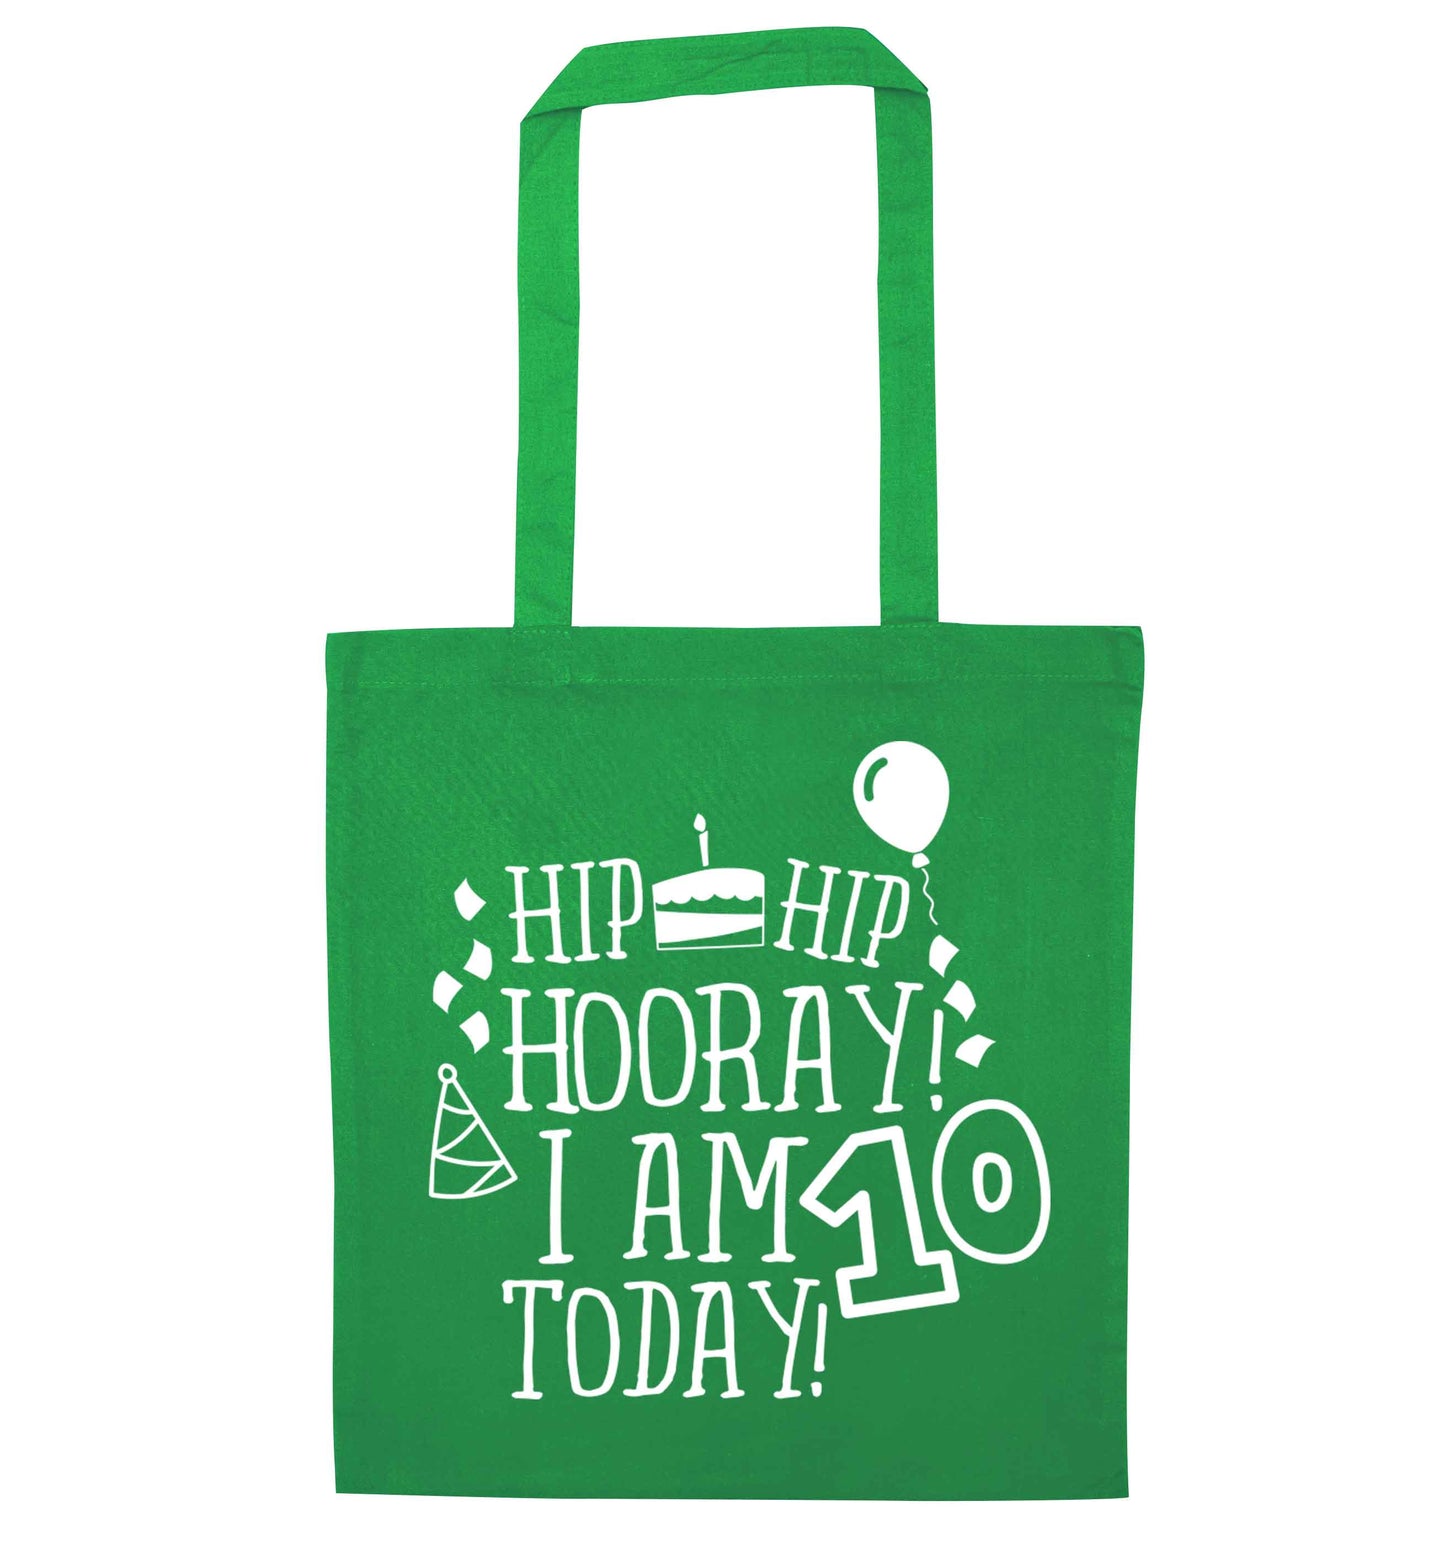 Hip hip hooray I am ten today! green tote bag